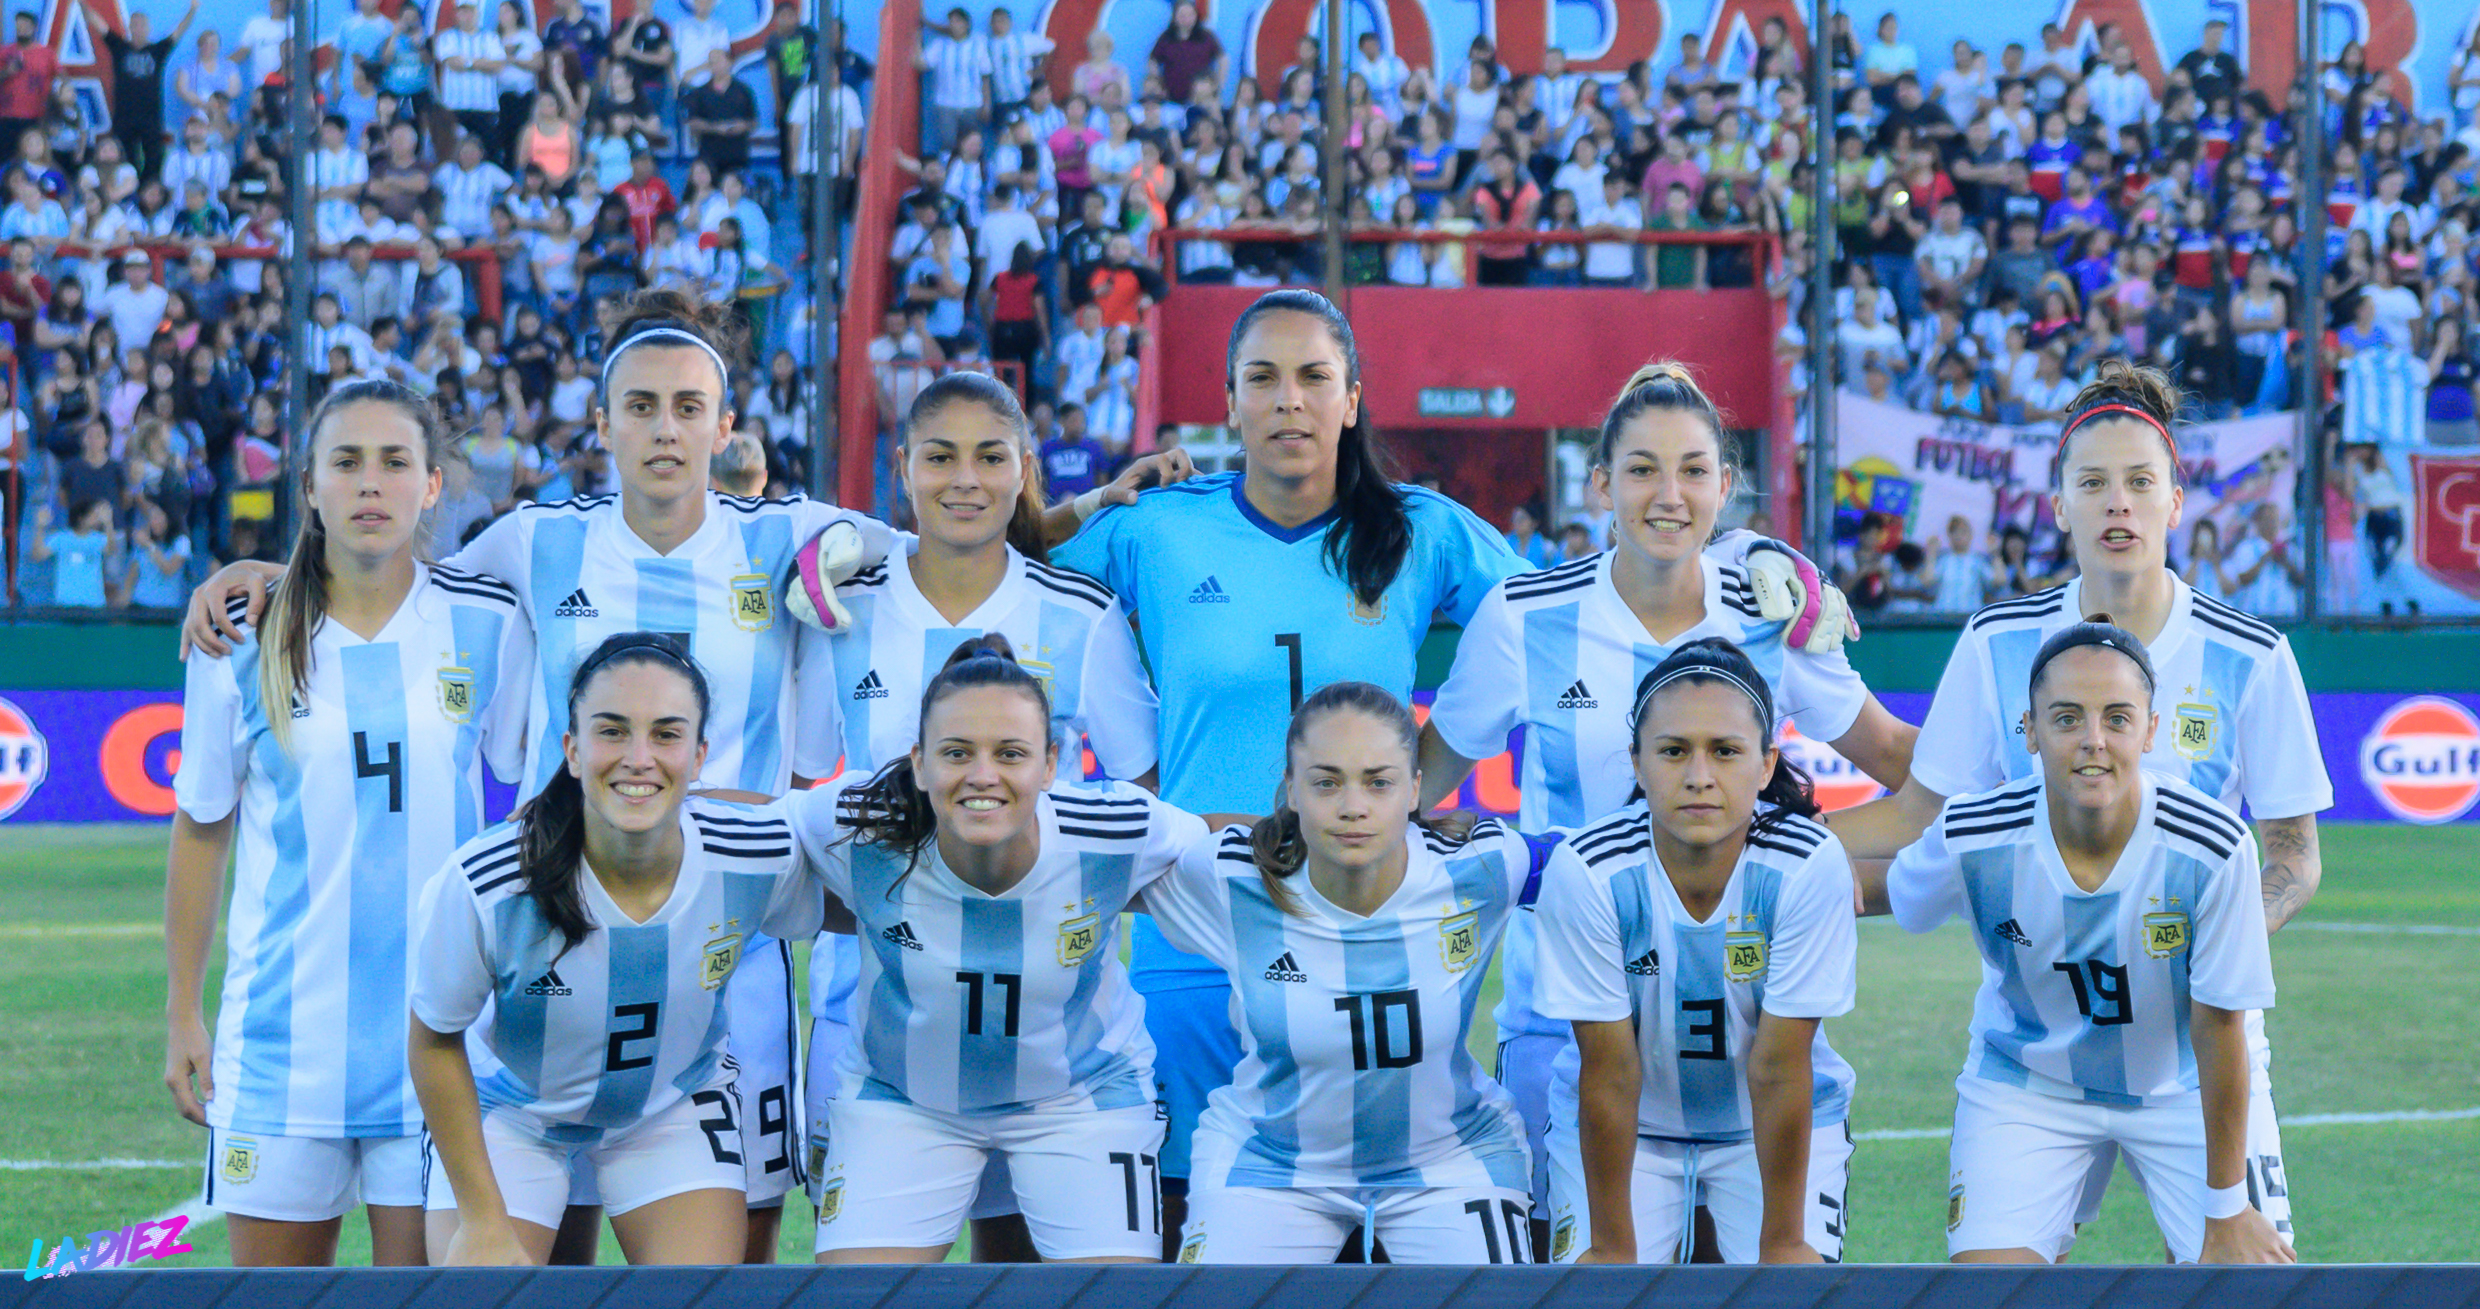 File:Seleccion argentina futbol femenino panama 8nov2018 la 00001 18.png - Wikimedia Commons